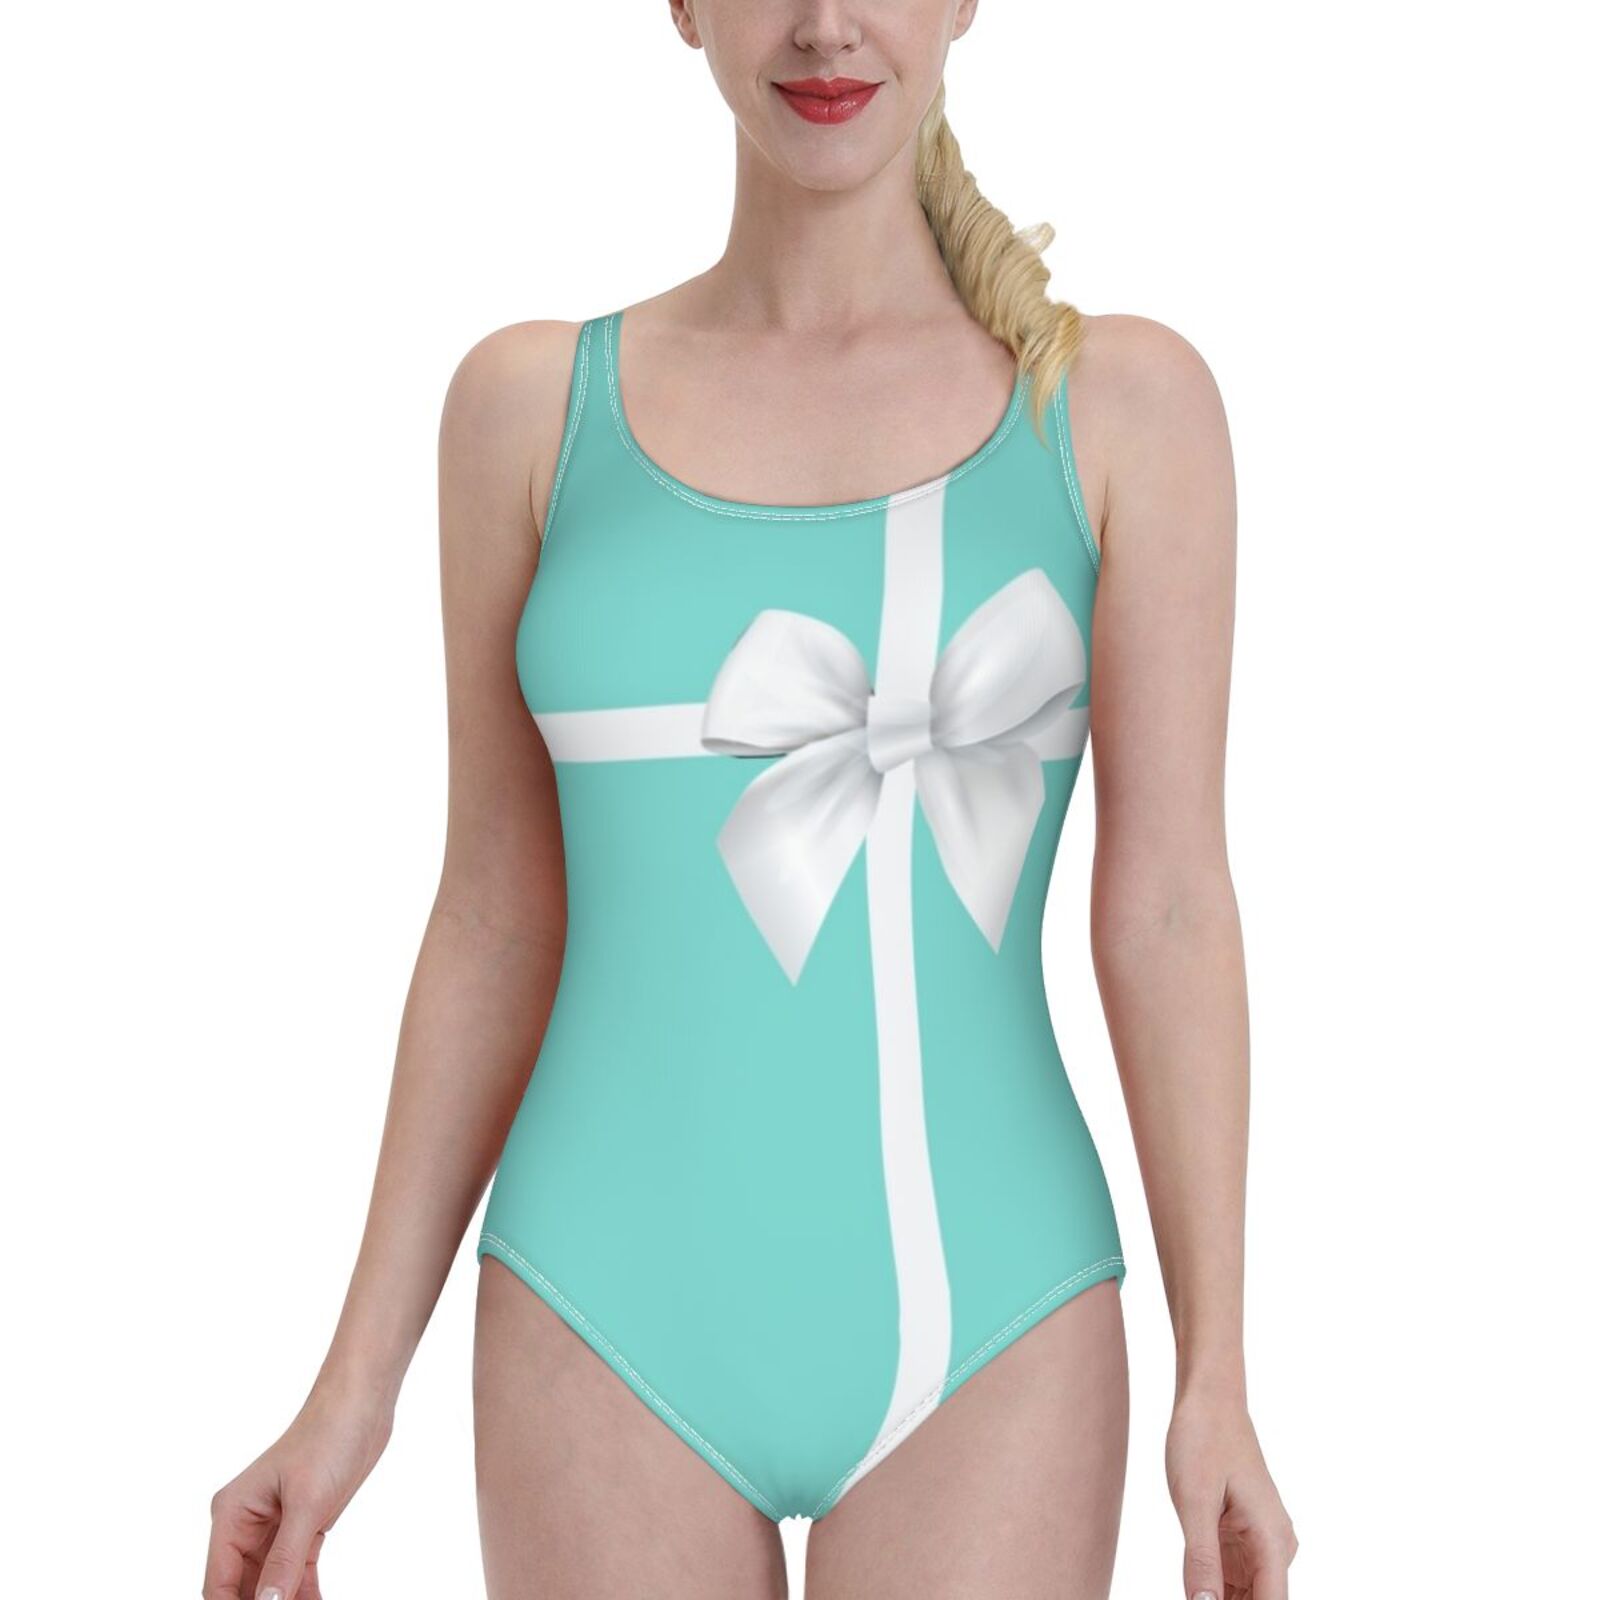 Boîte cadeau bleu arc blanc femme ébouriffer un morceau de maillot de bain sexy body body monokini mail de bain de bain aqua teal co s bleu chic